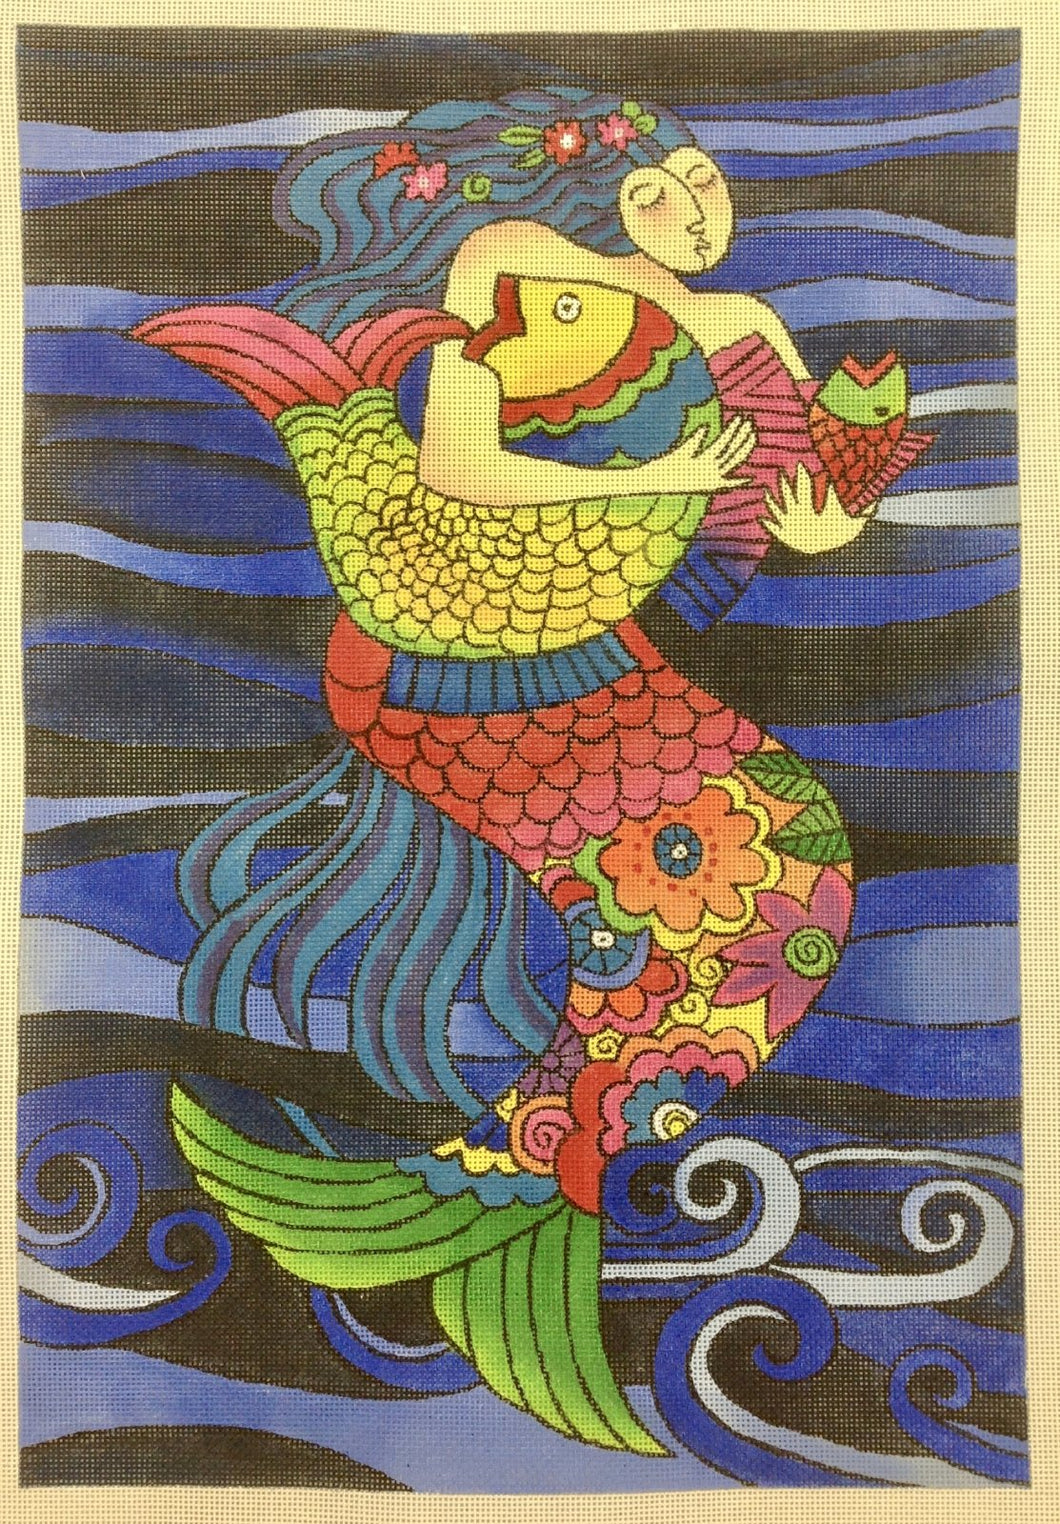 mermaid holding fish